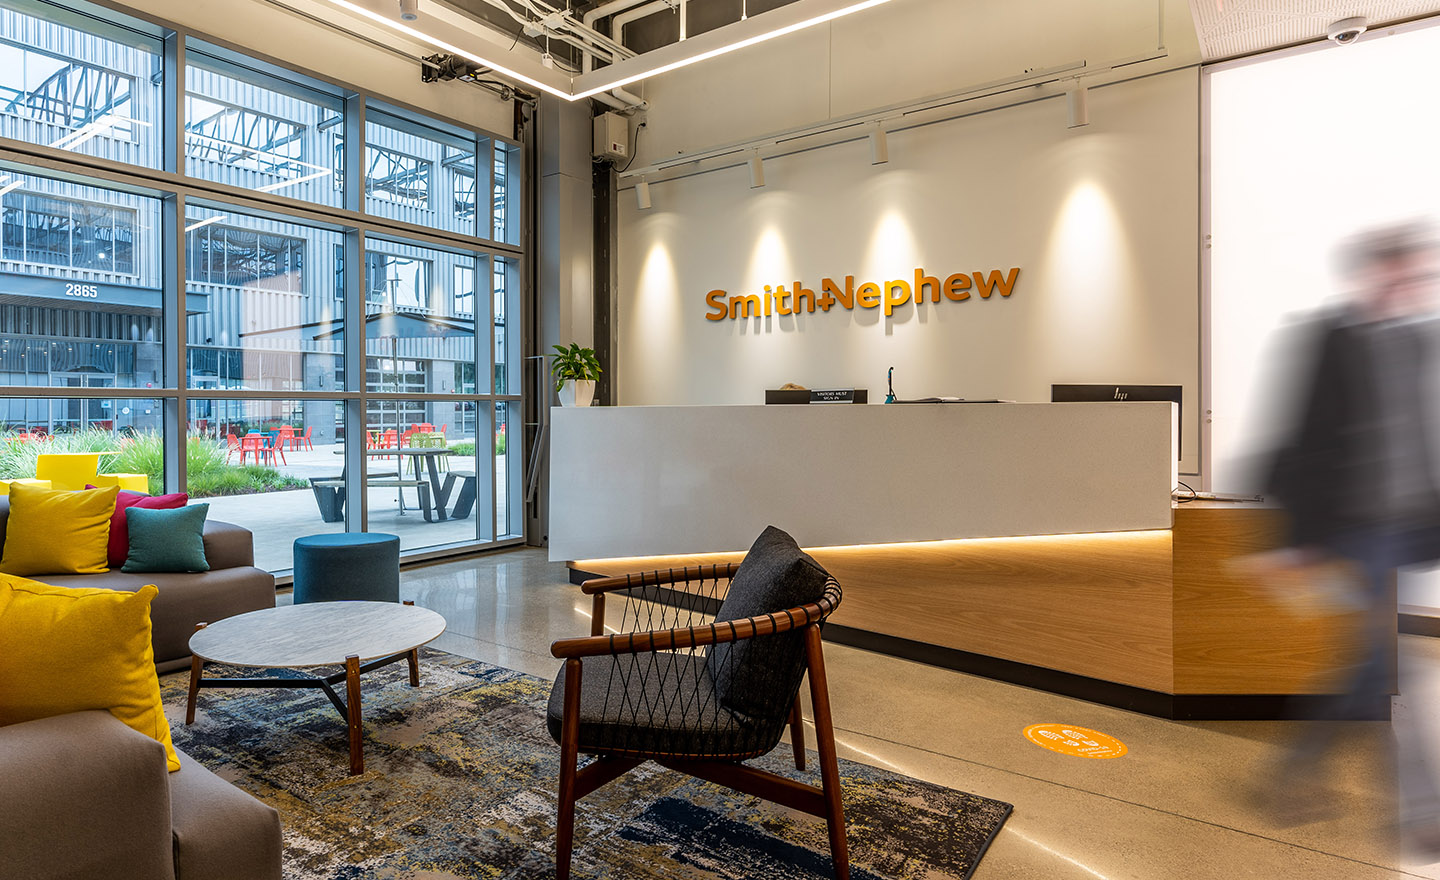 Smith&Nephew Office Sign